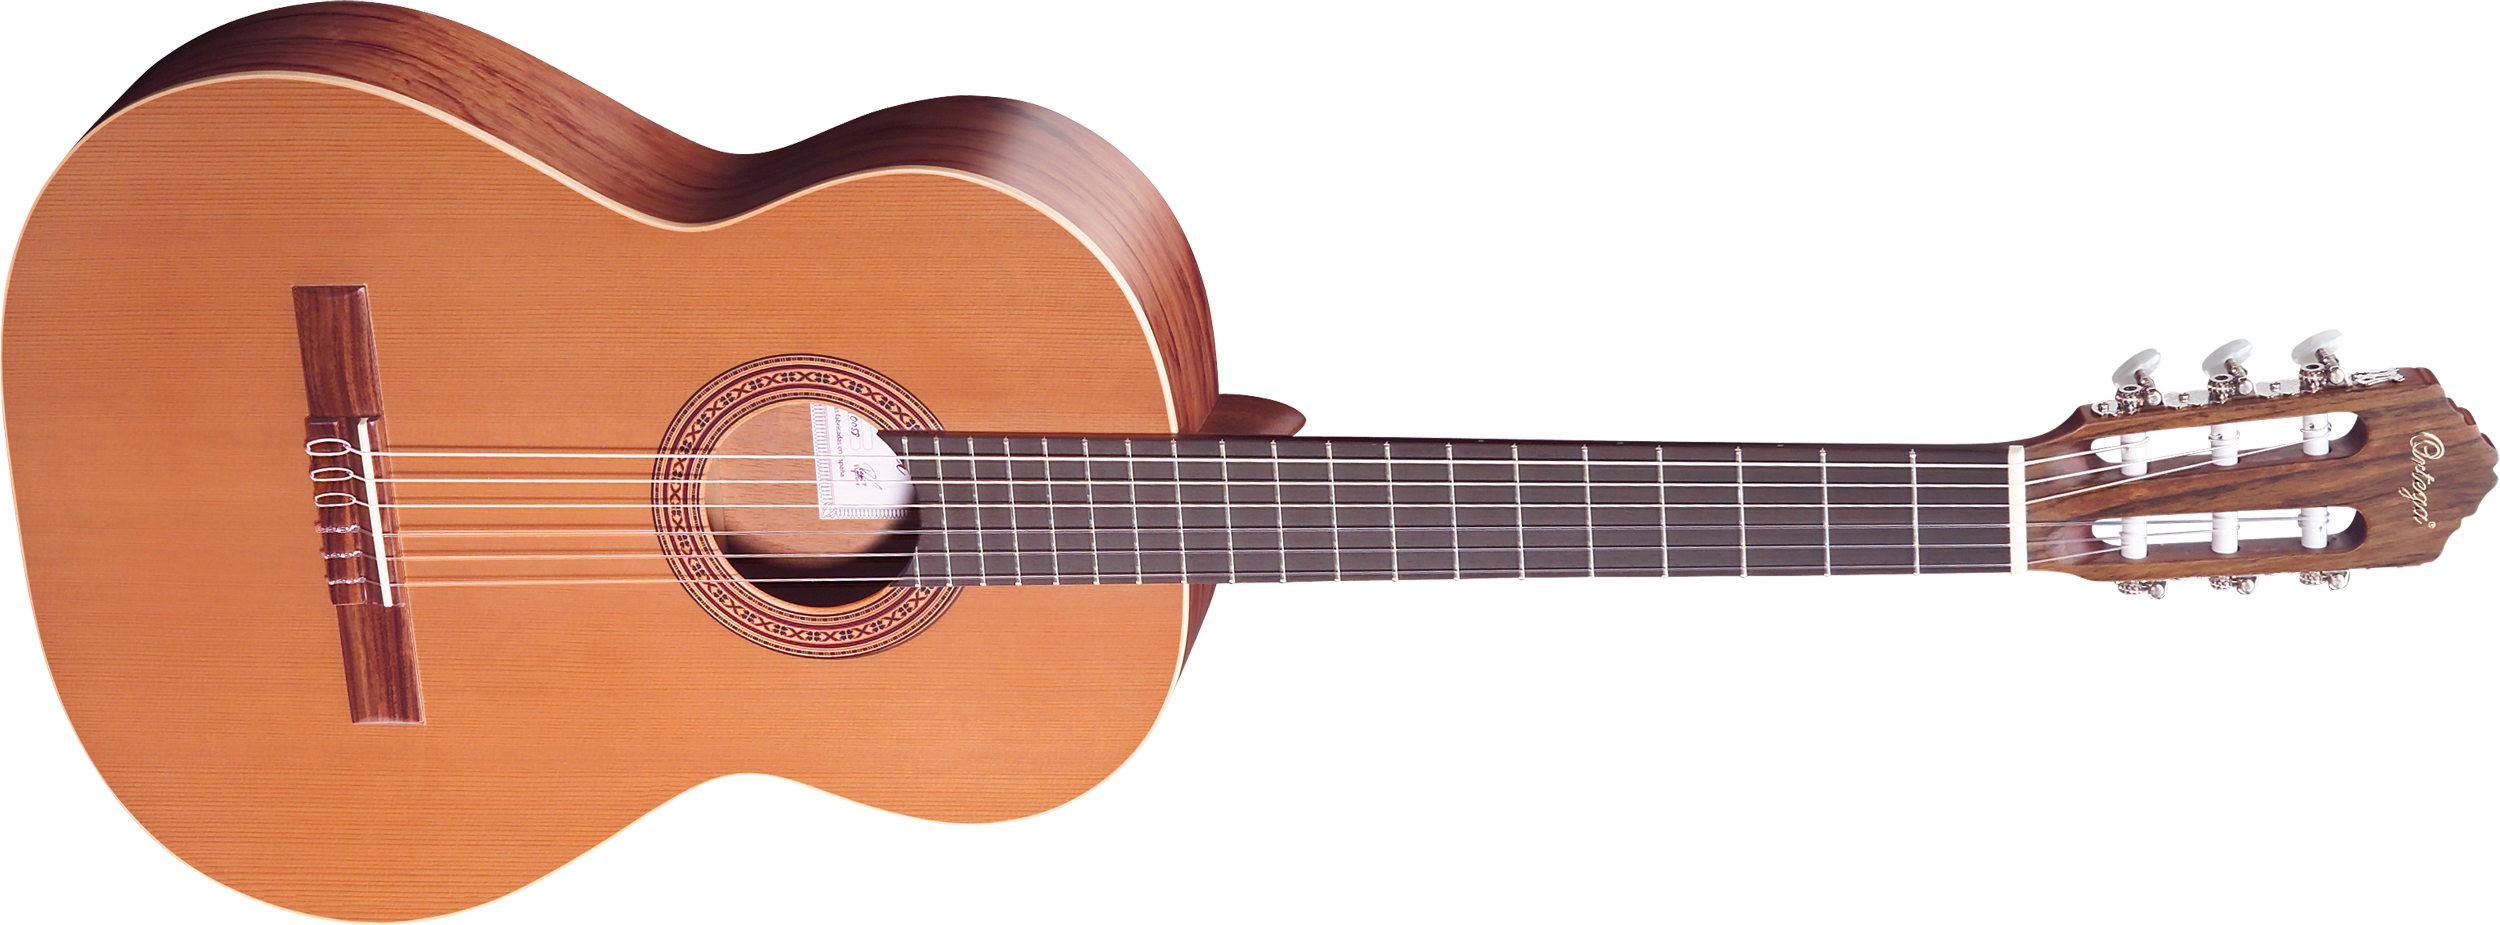 Guitar Instrument Musical Acoustic Free Transparent Image HQ PNG Image